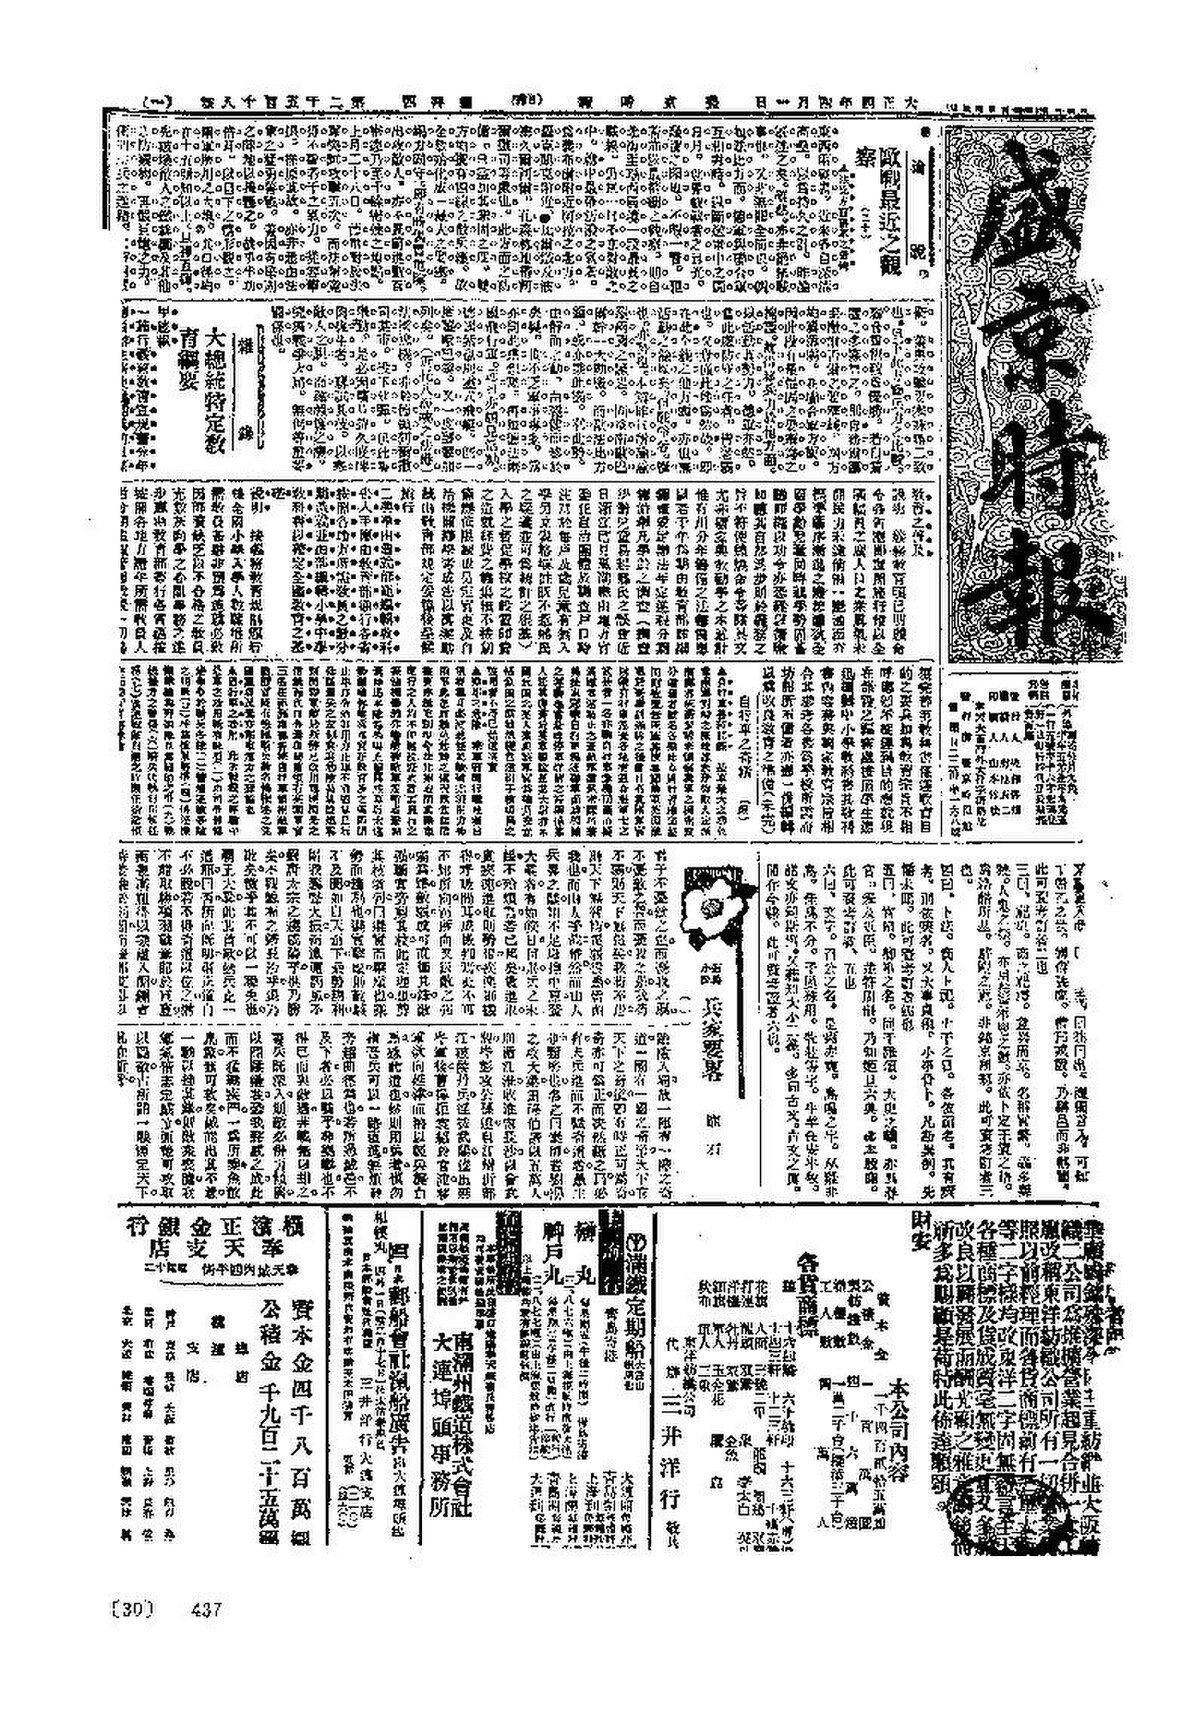 File:NLC511-023031103010001-77513 盛京時報第106卷.pdf - Wikimedia